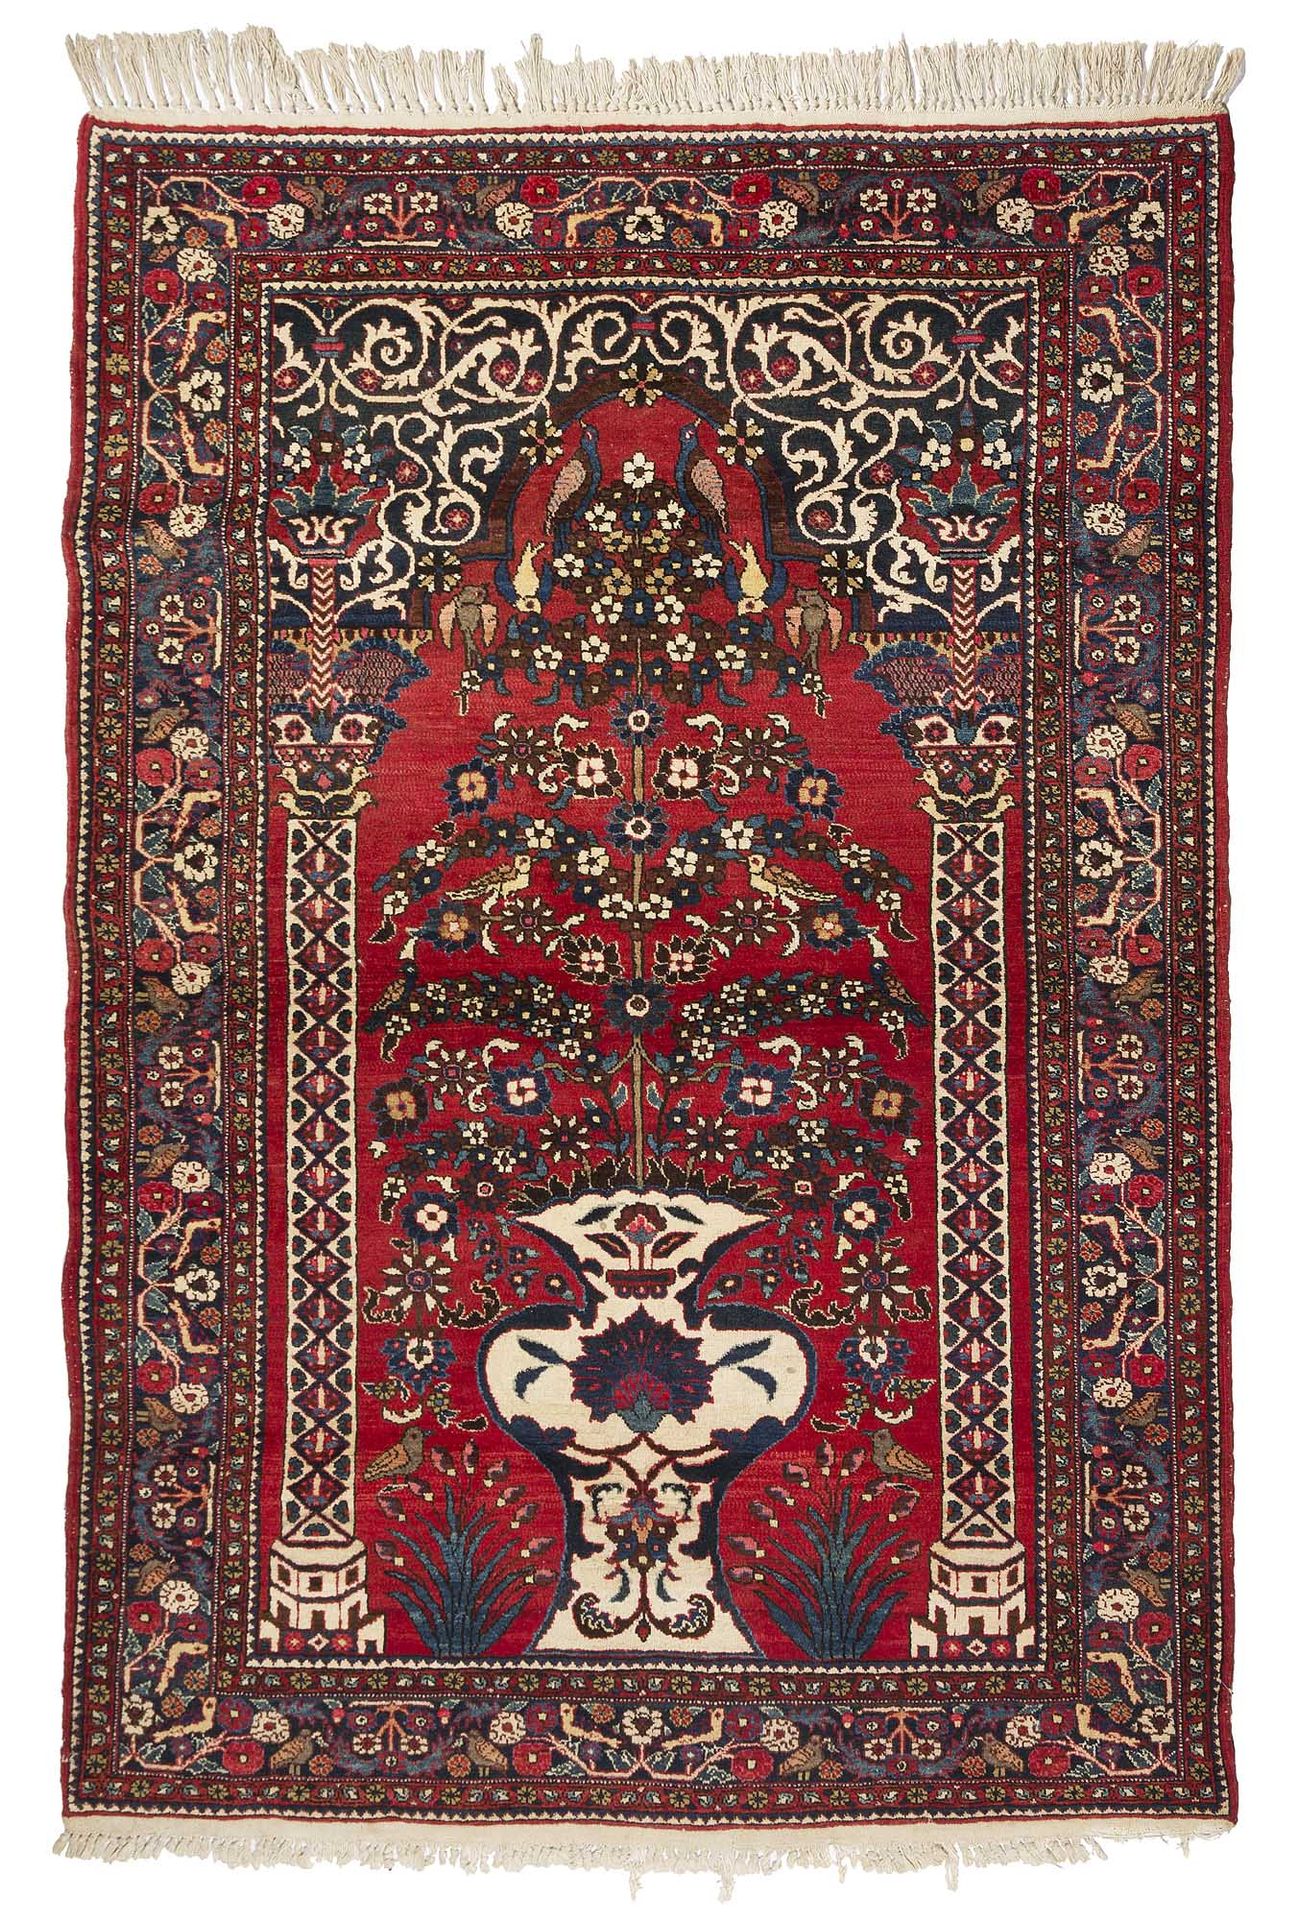 Null BIDJAR carpet (Persia), mid 20th century

Dimensions : 208 x 132cm

Technic&hellip;